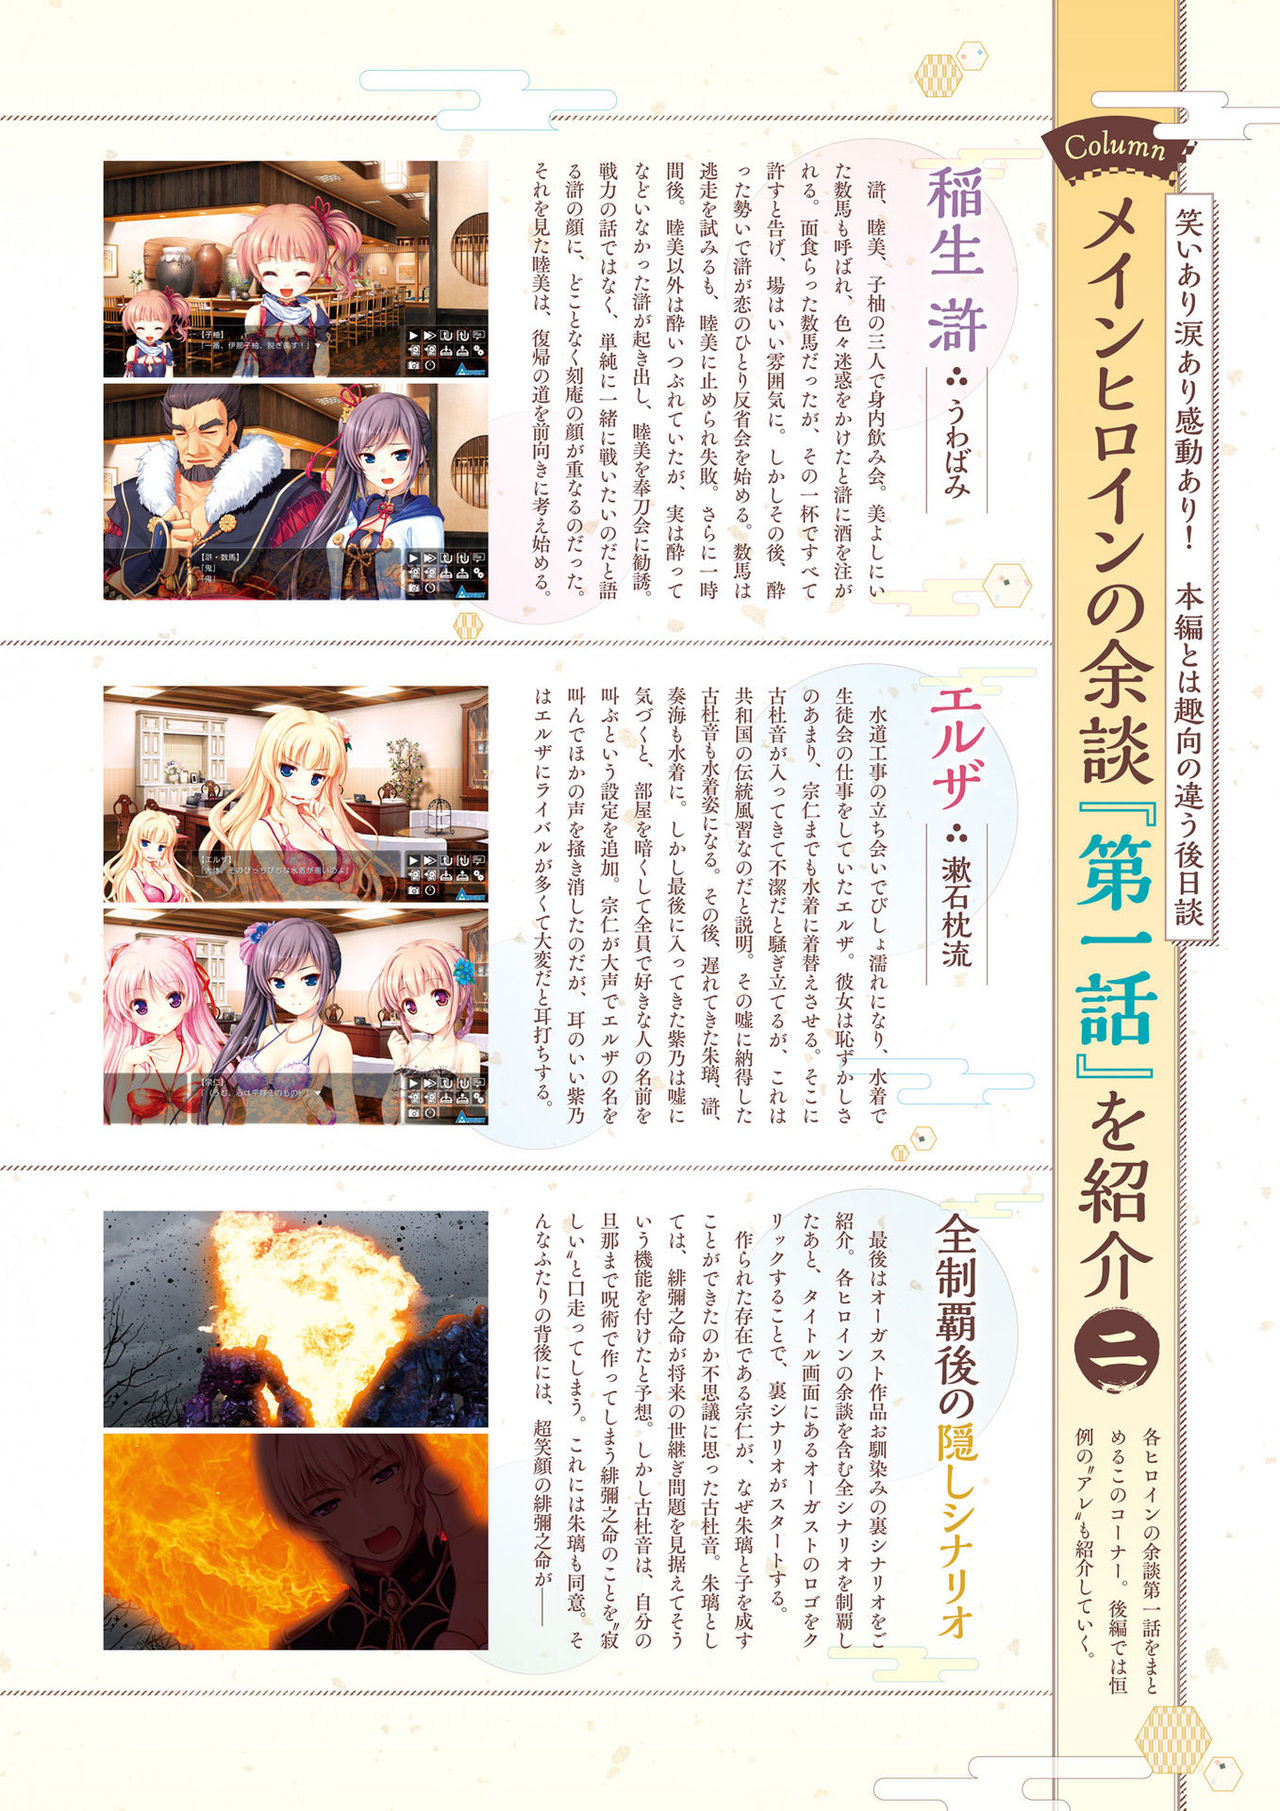 Sen no Hatou, Tsukisome no Kouki Visual Fanbook [Digital] 千の刃濤、桃花染の皇姫 ビジュアルファンブック [DL版]